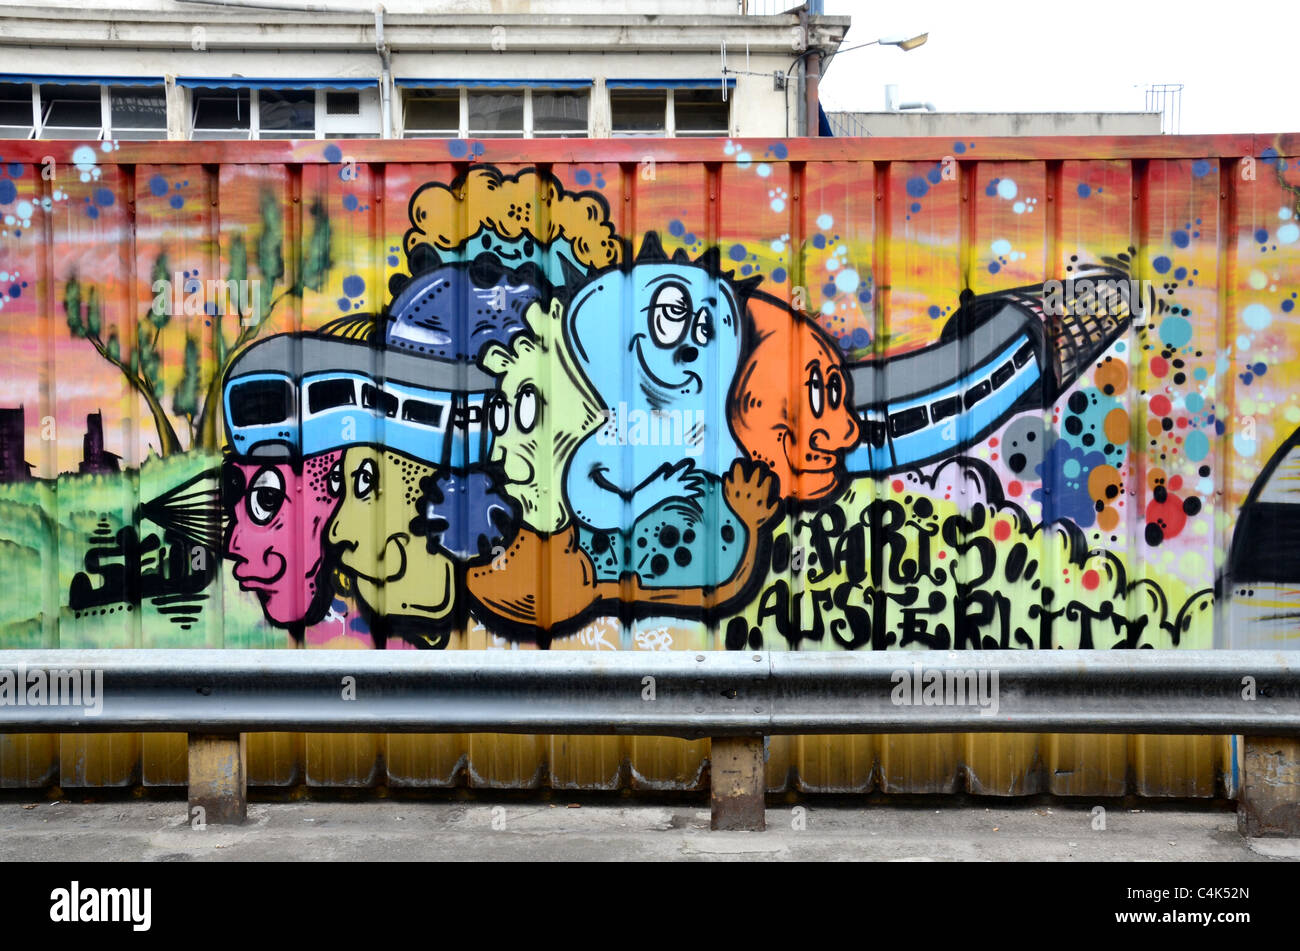 Graffiti by the Gare d'Austerlitz in Paris, France. Stock Photo